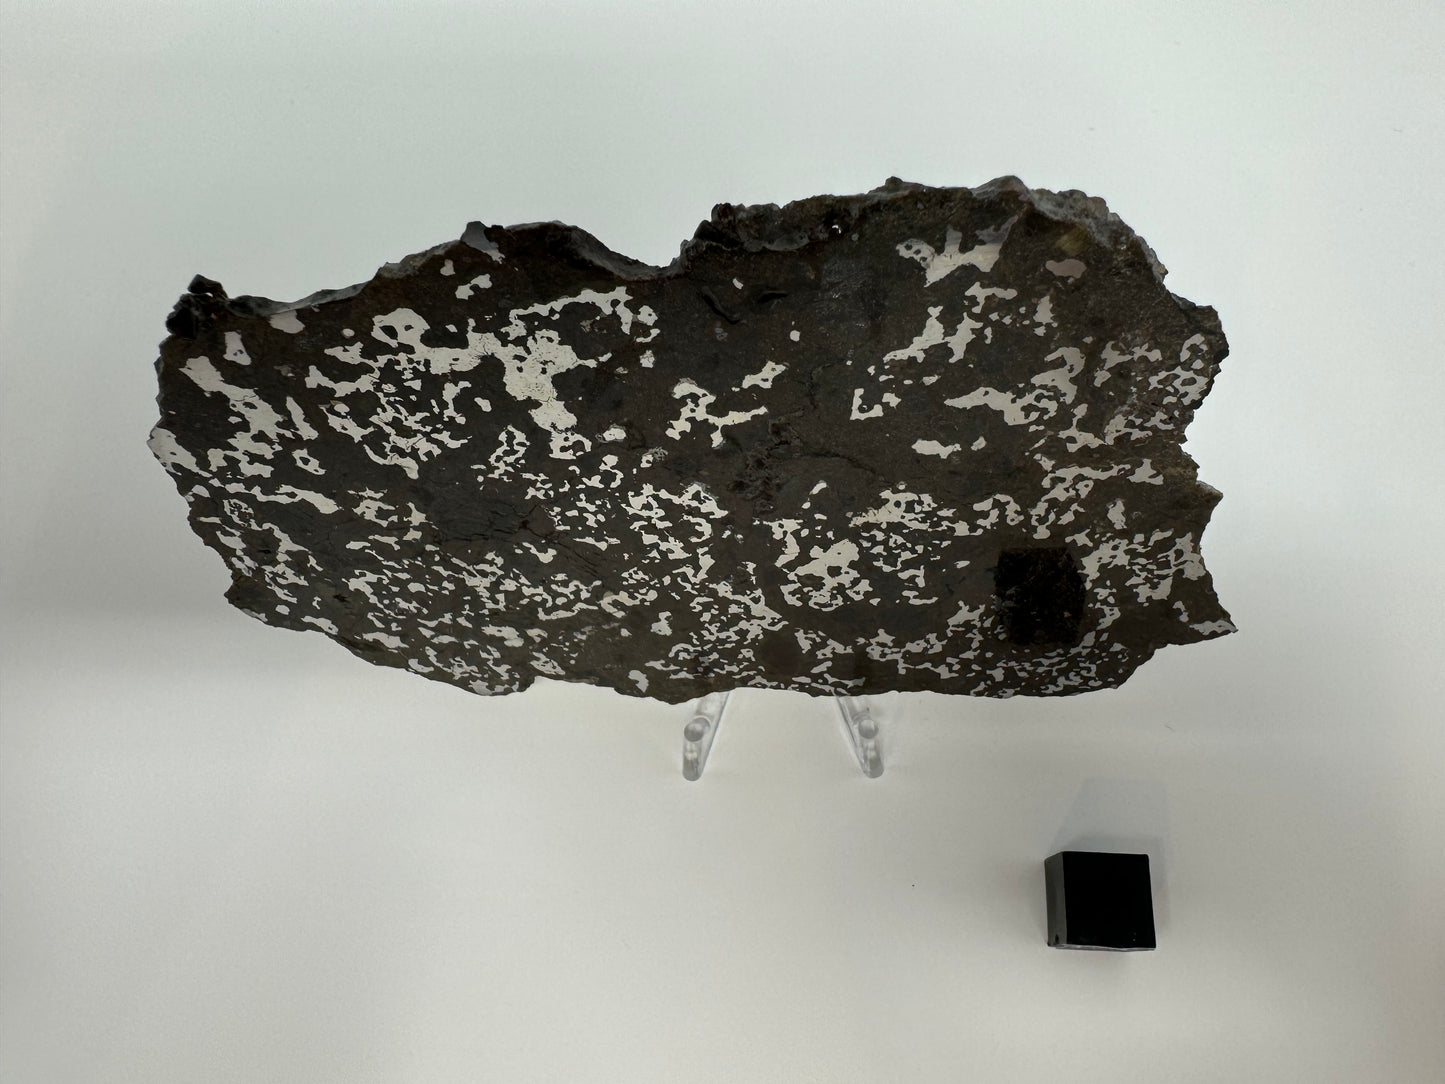 65.3g El Milhas 005 Mesosiderite Meteorite - The Estherville Lookalike!